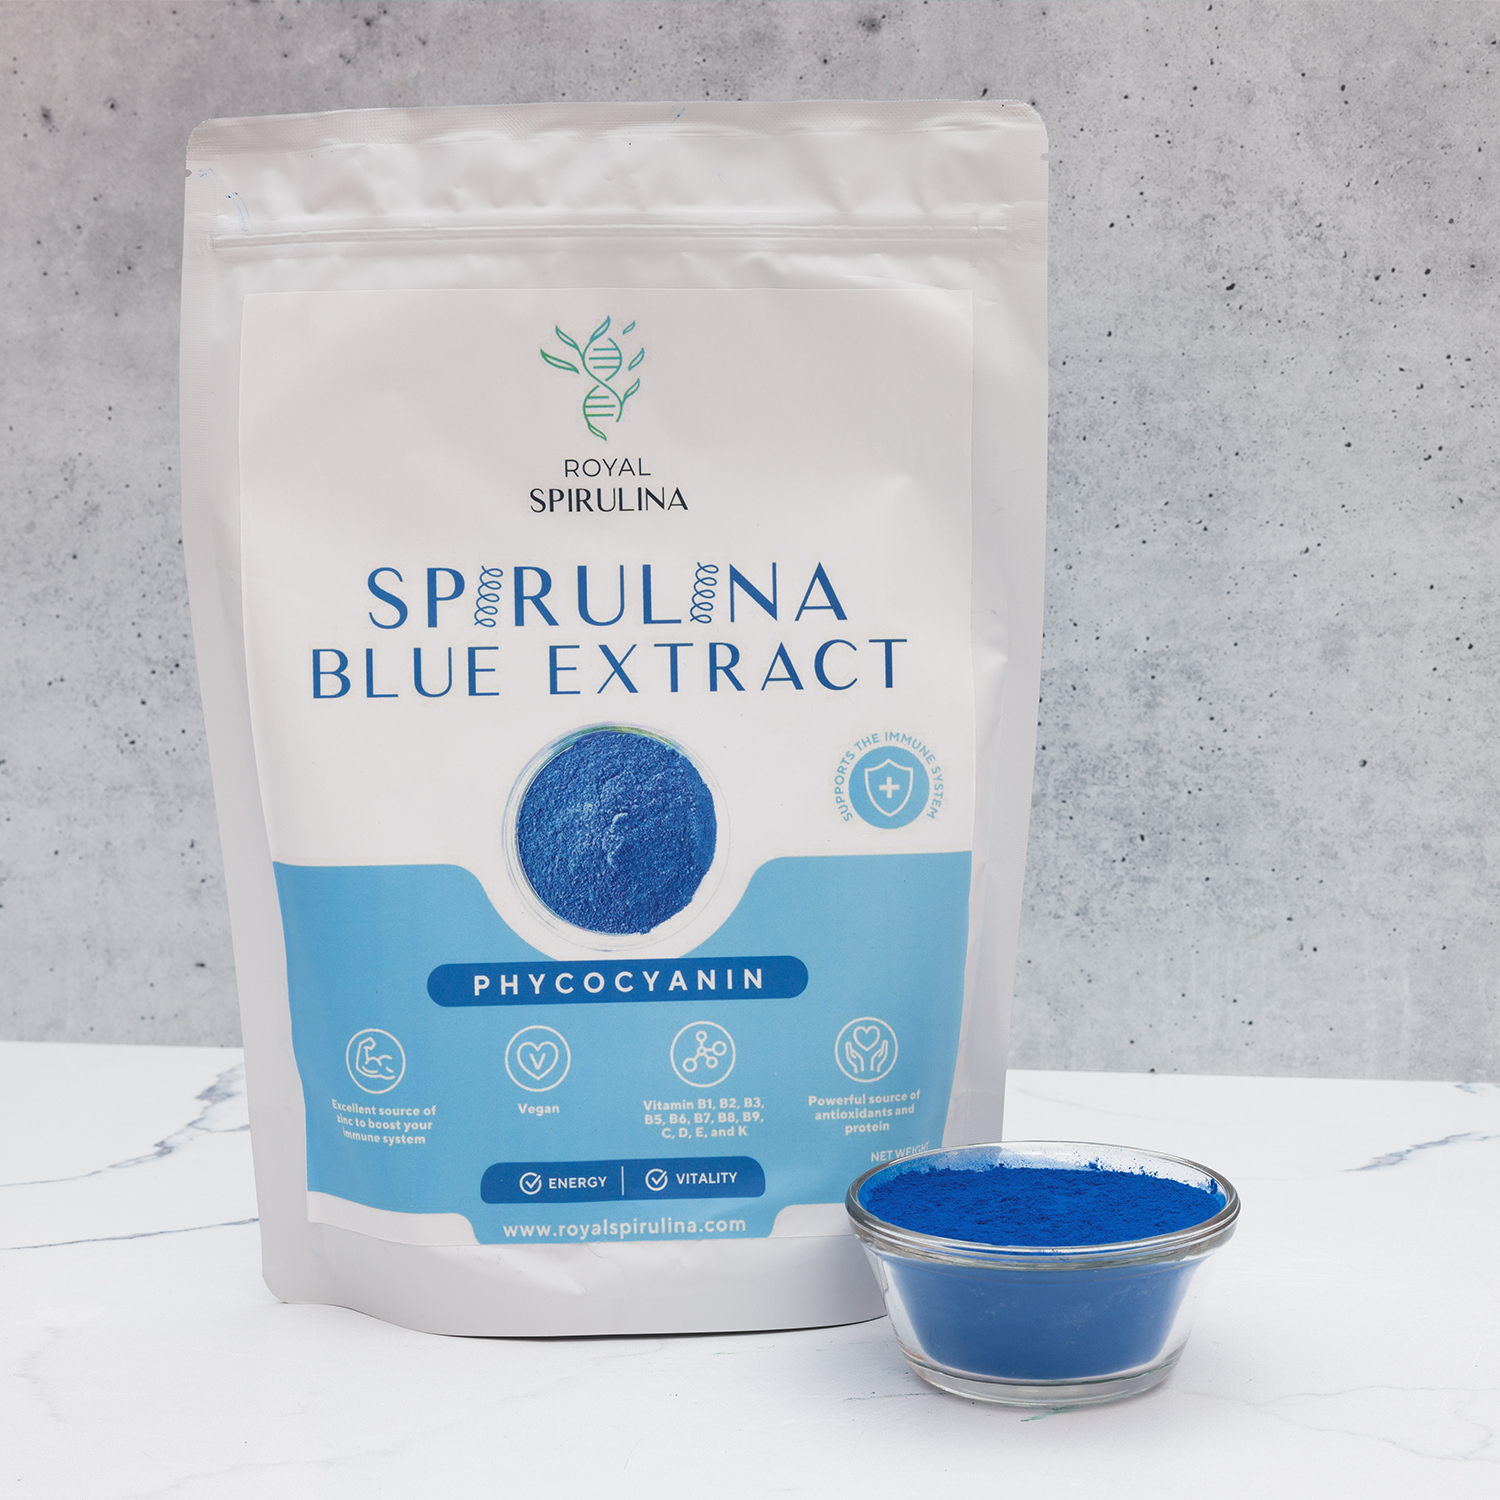 Spirulina Phycocyanin Extract - 1 lb bulk